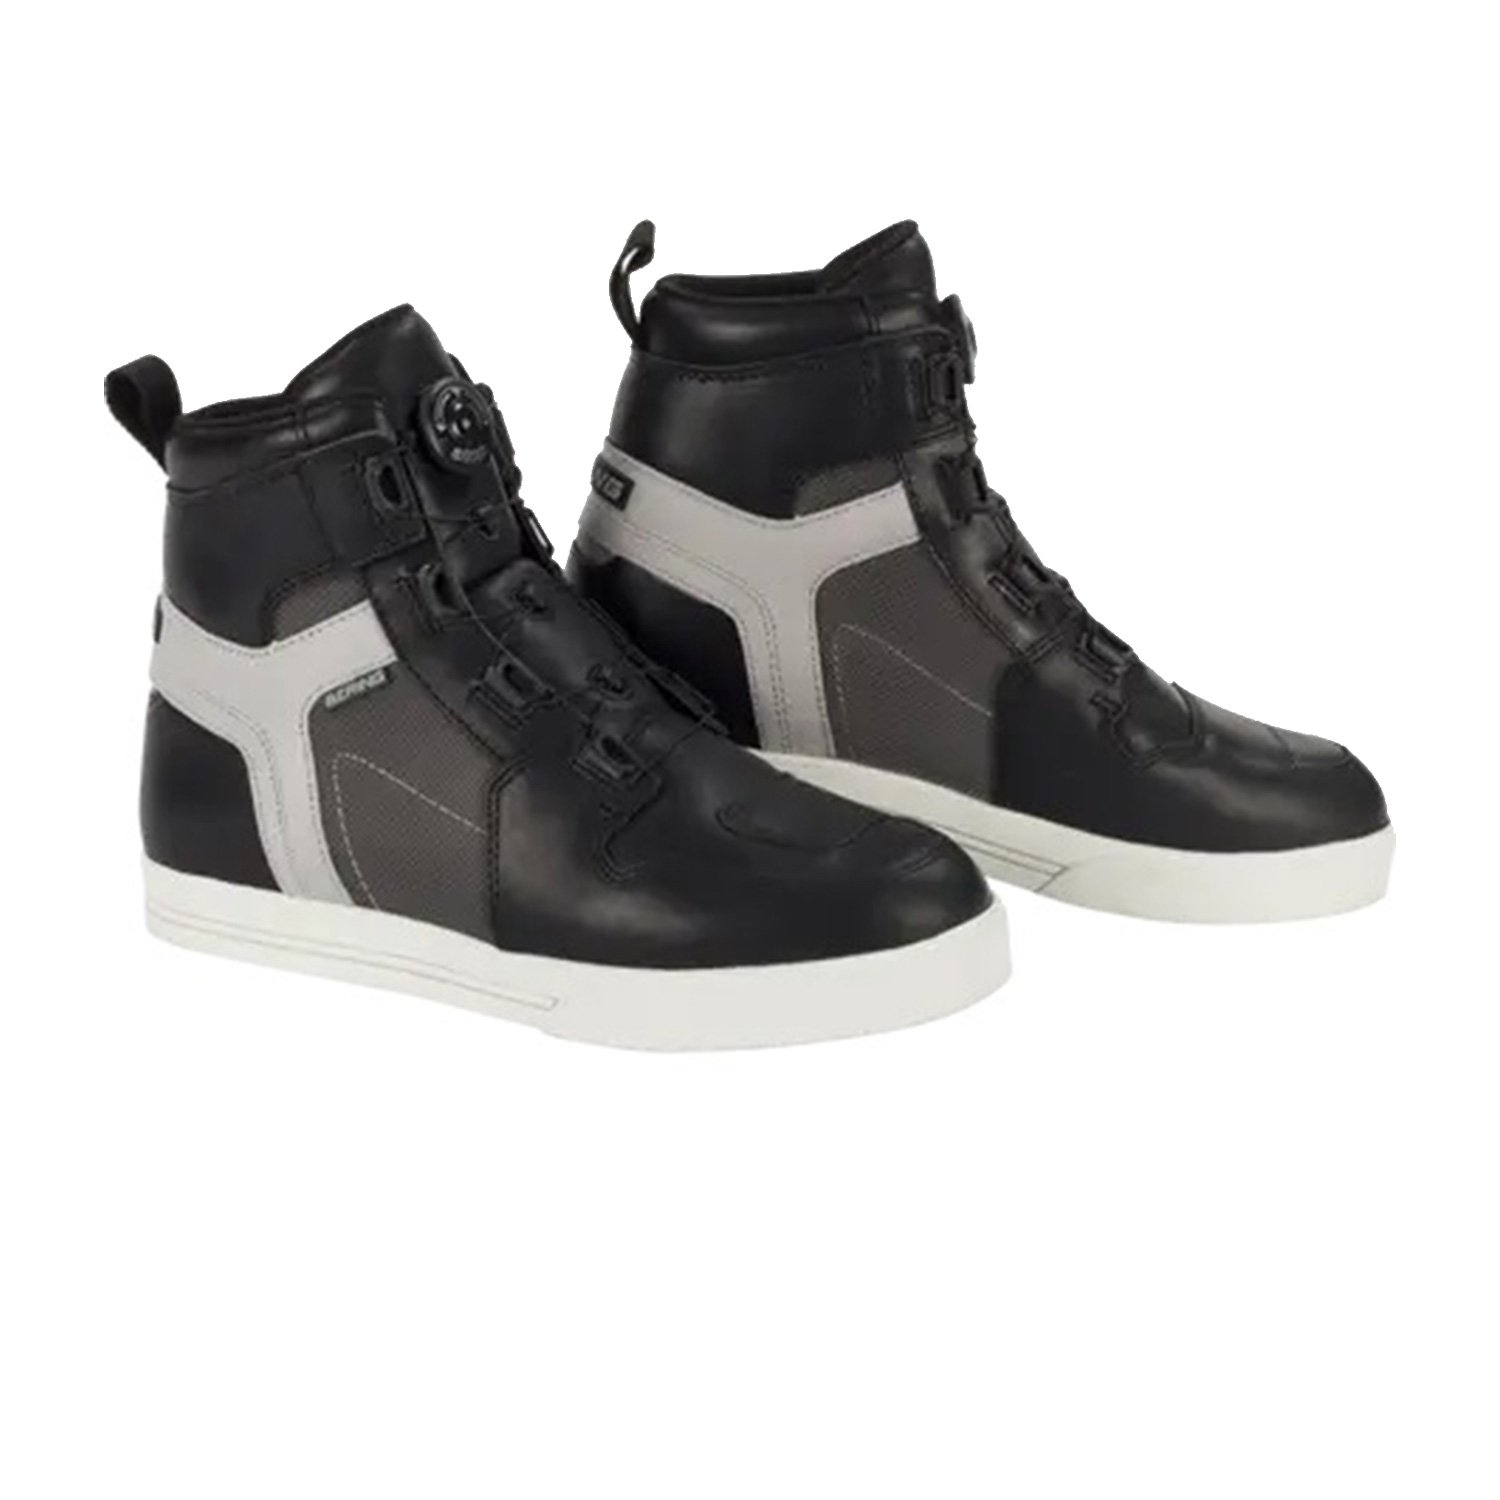 Image of Bering Sneakers Reflex Vented Black Grey Size 46 EN